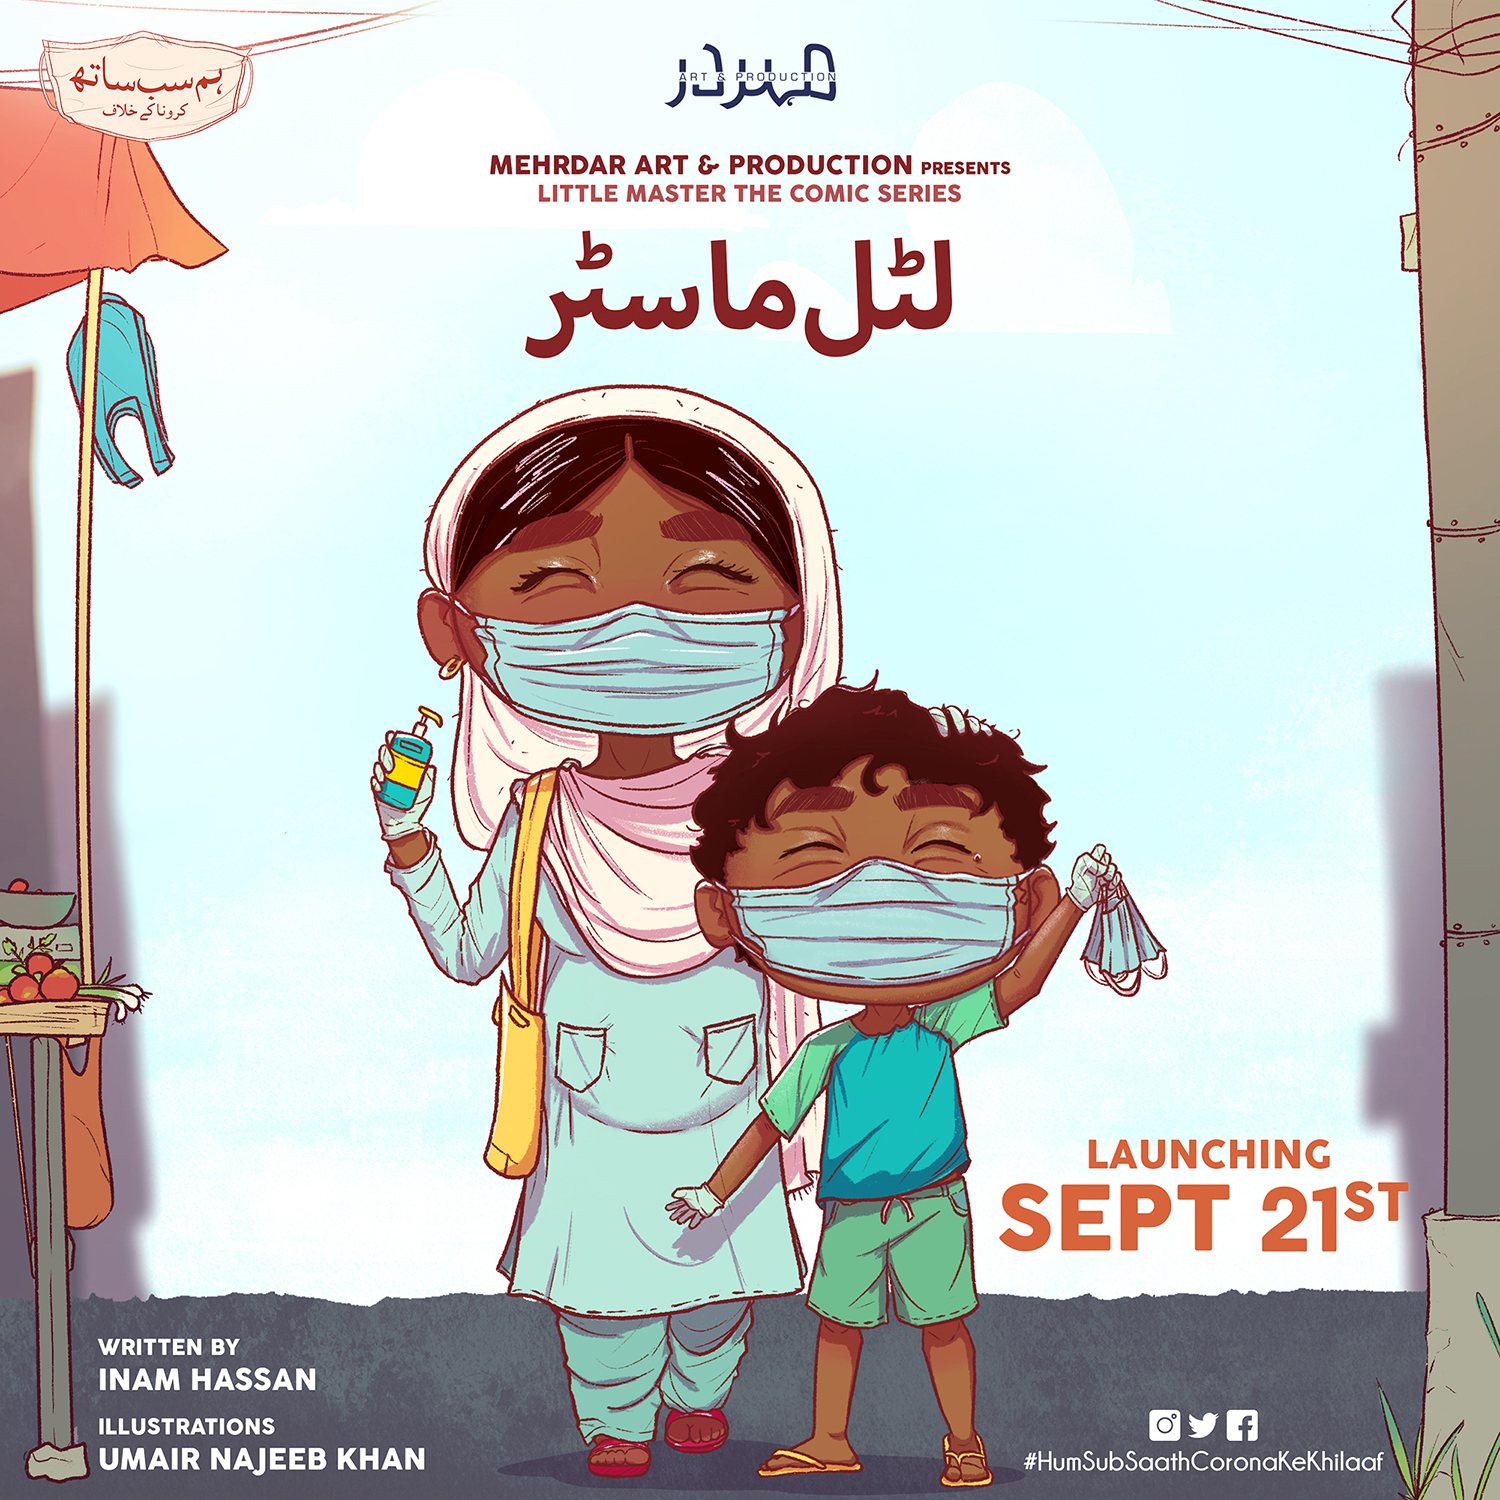 Urdu comic book 'Little Master' to help Pakistani children fight COVID